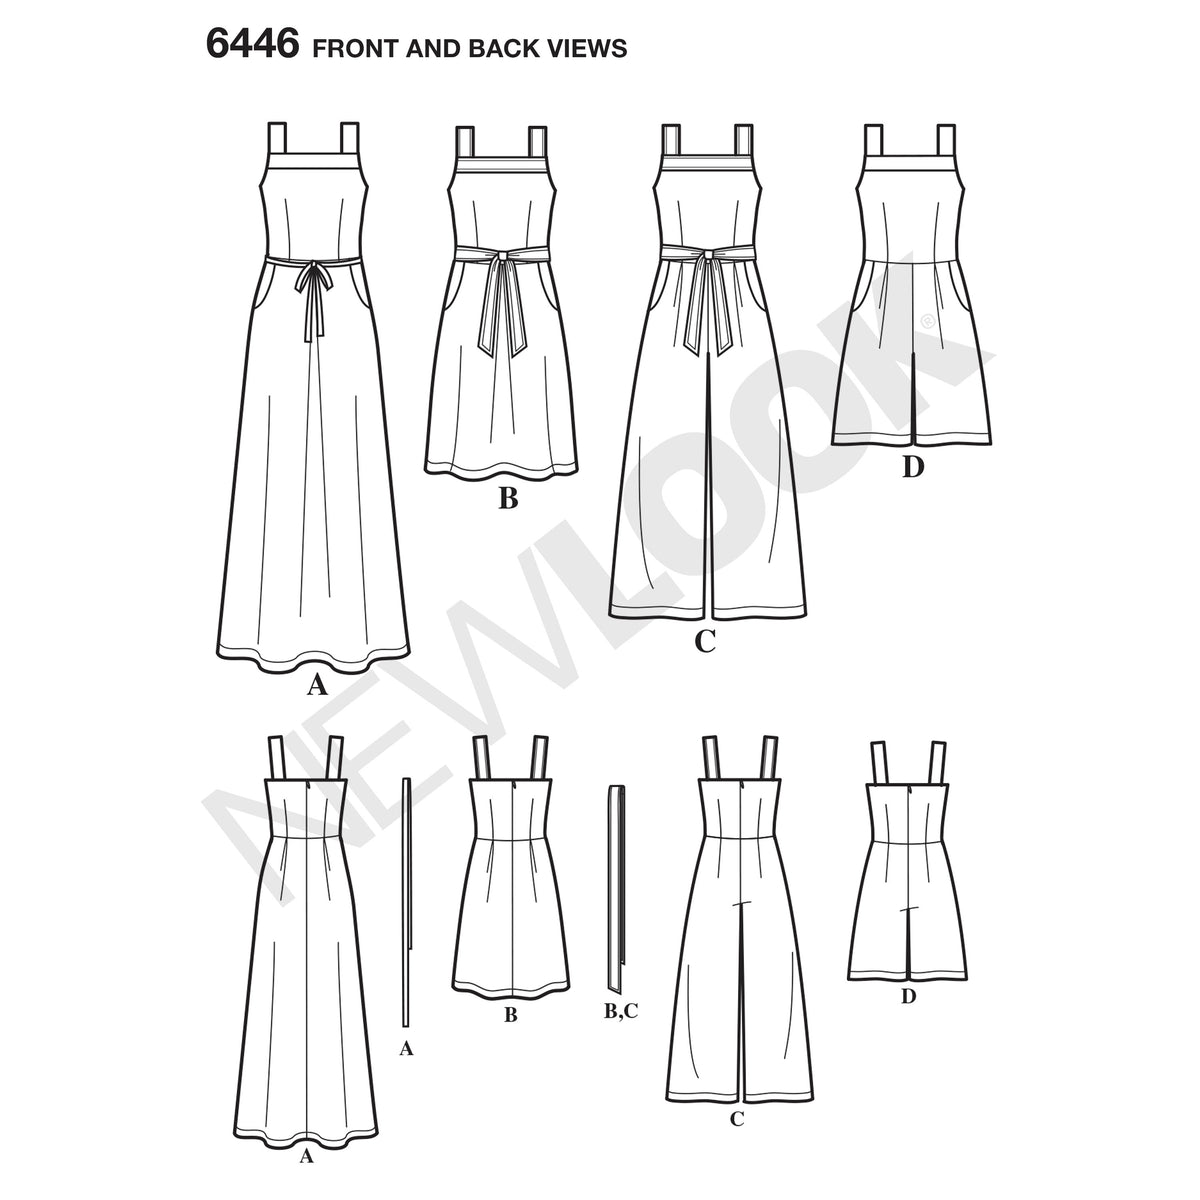 6446 Misses' Jumpsuits and Dresses